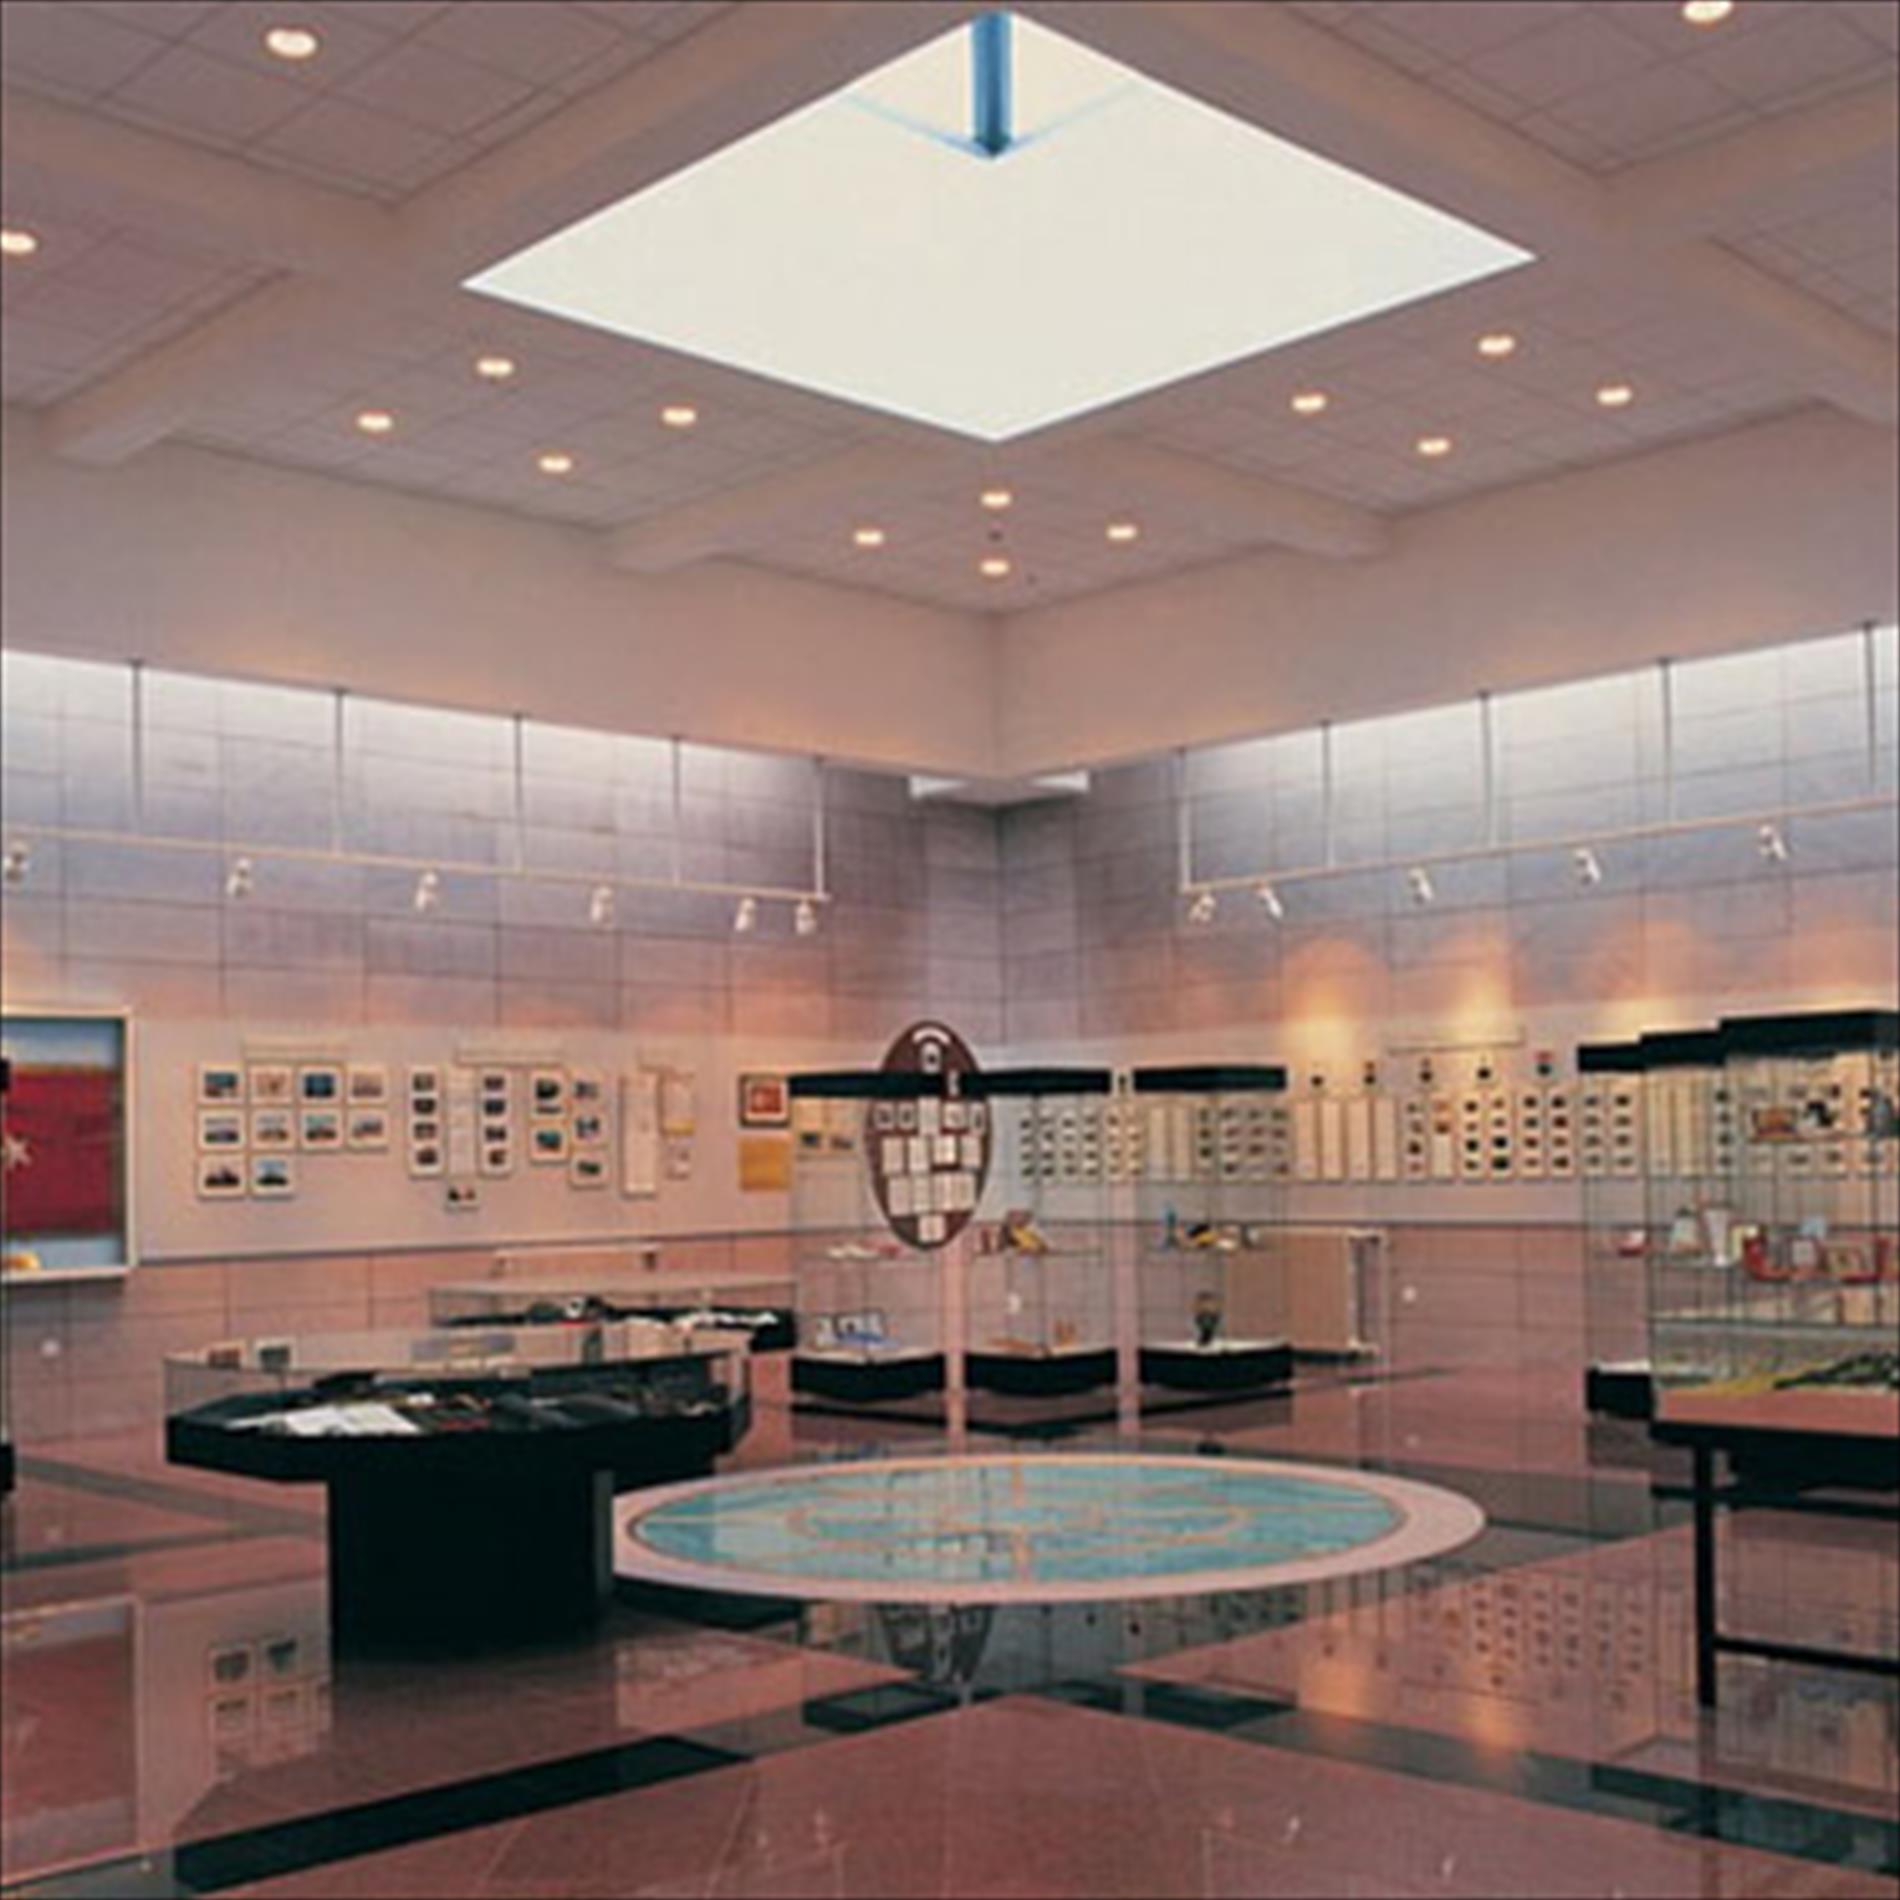 Presidential Museum